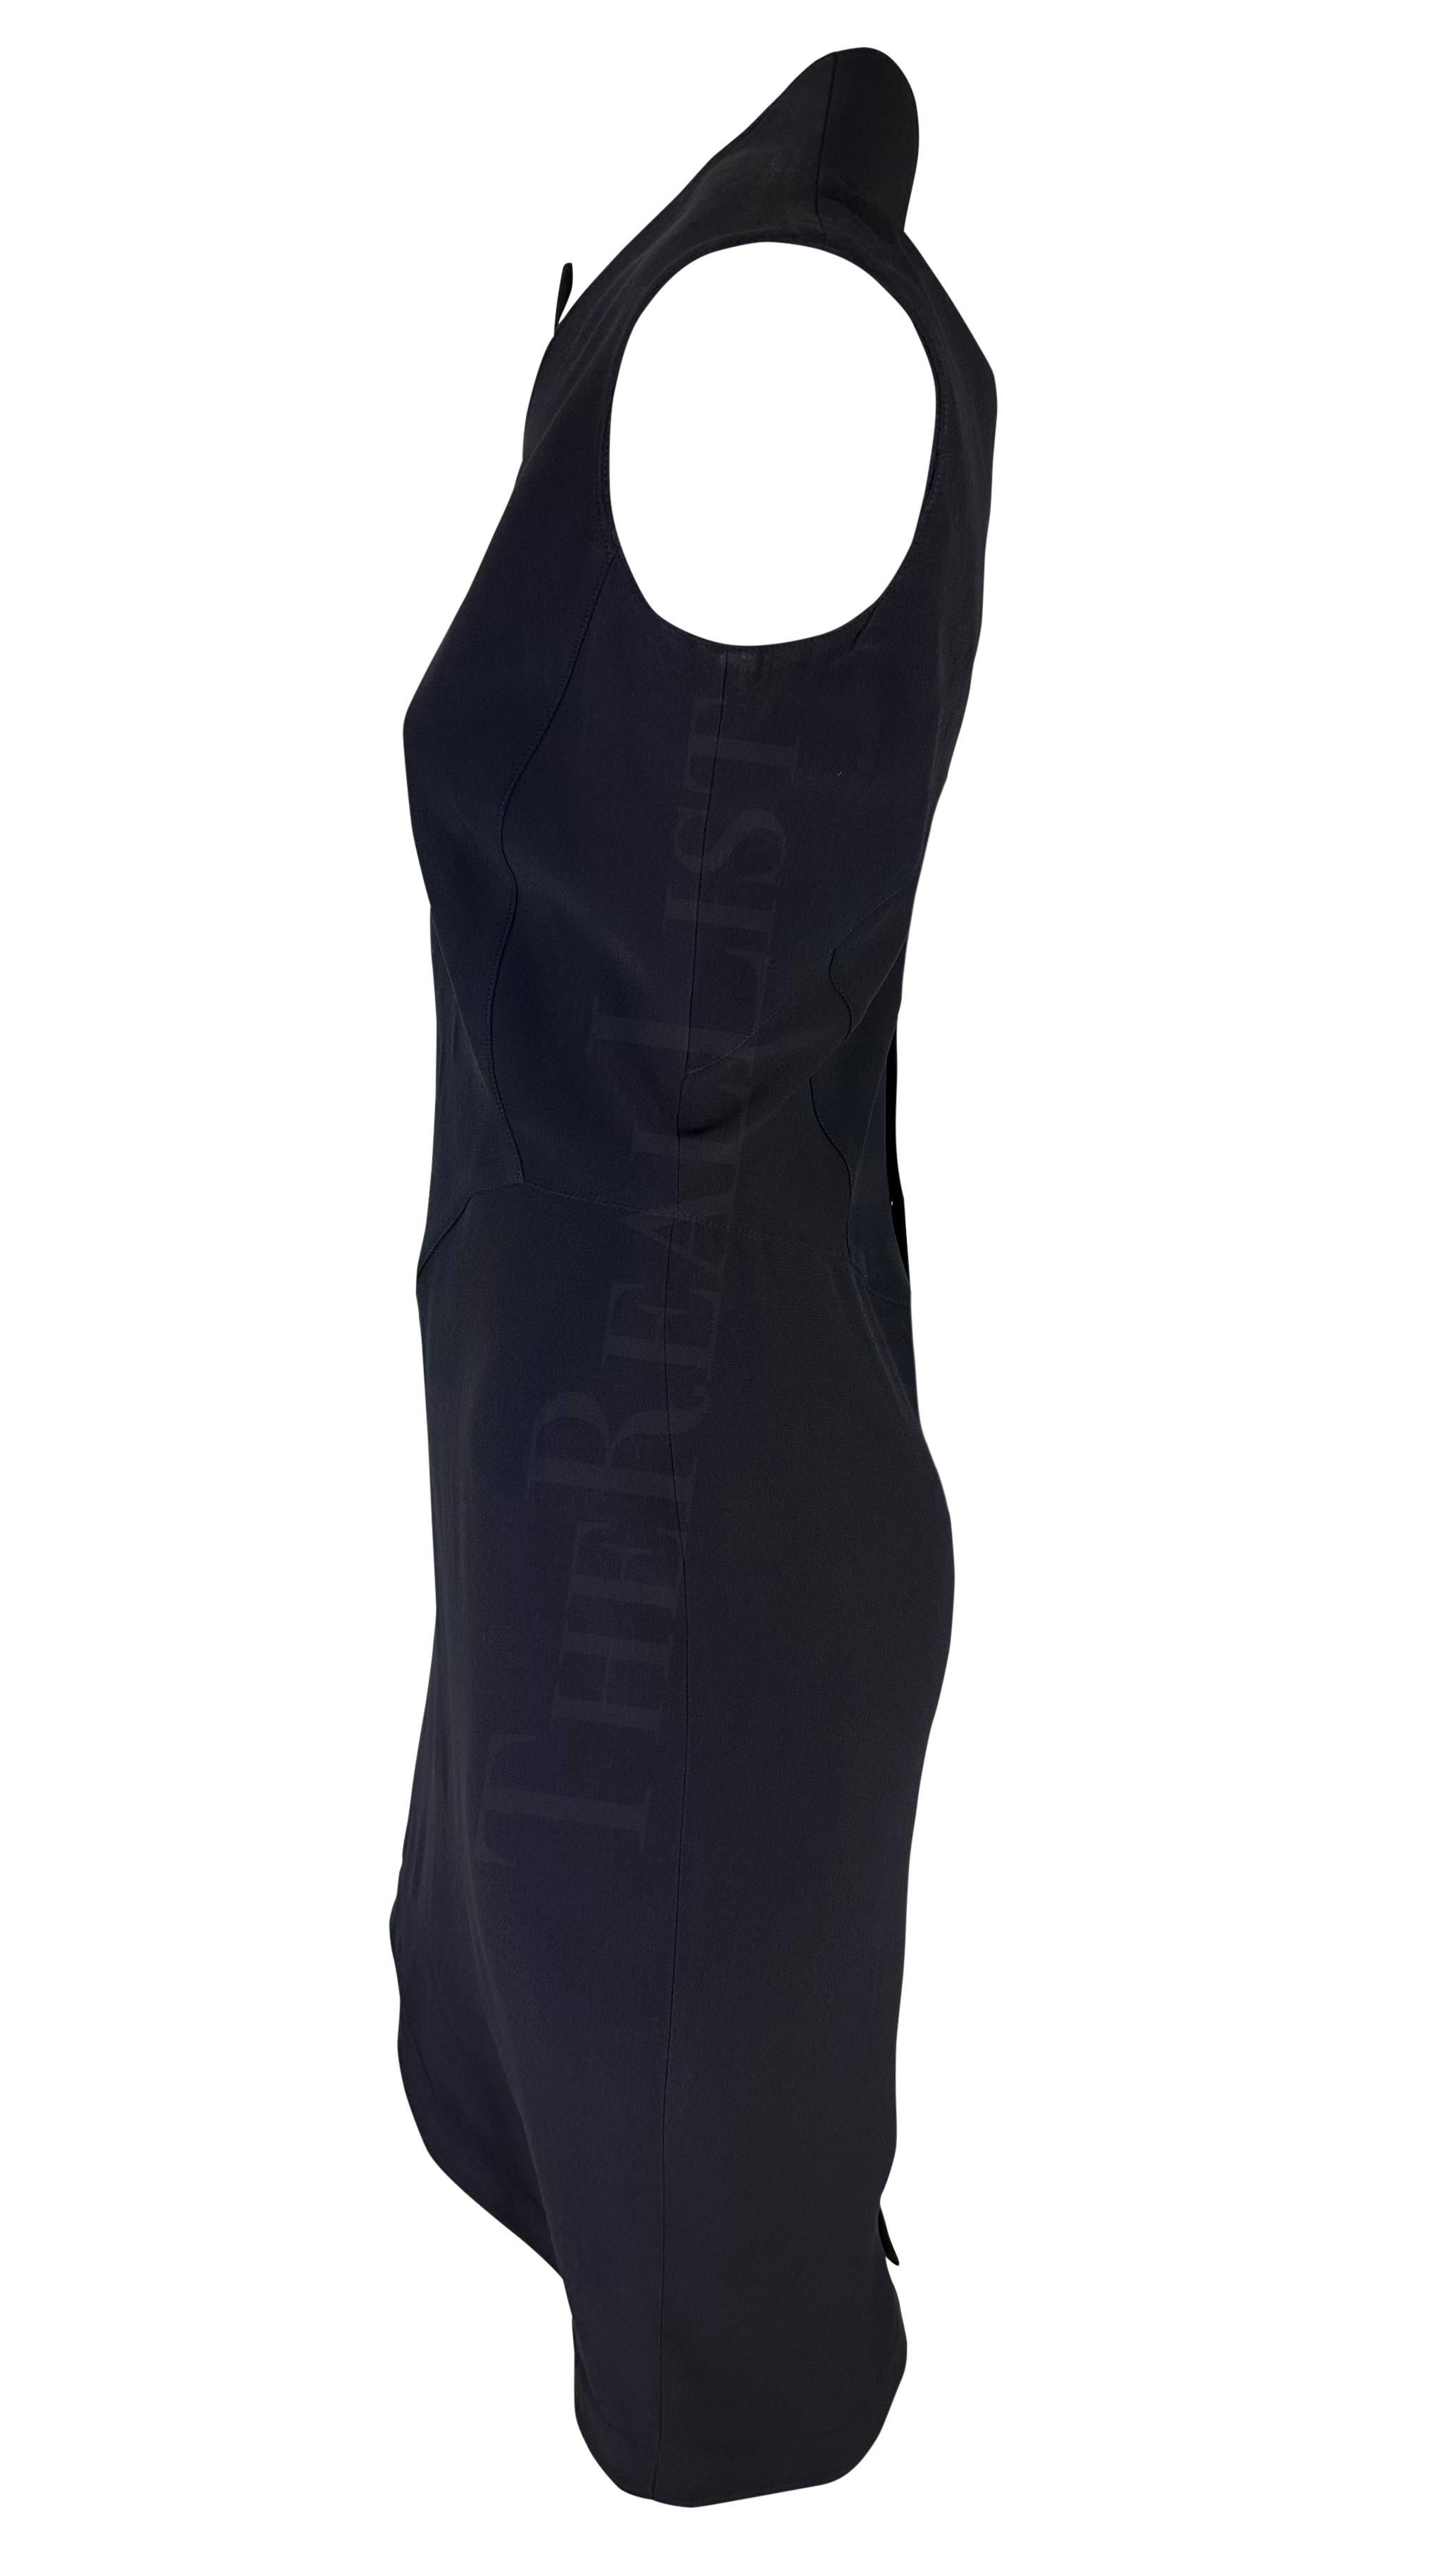 S/S 1988 Thierry Mugler Runway Ad Asymmetric Sculptural Navy Snap Dress For Sale 2